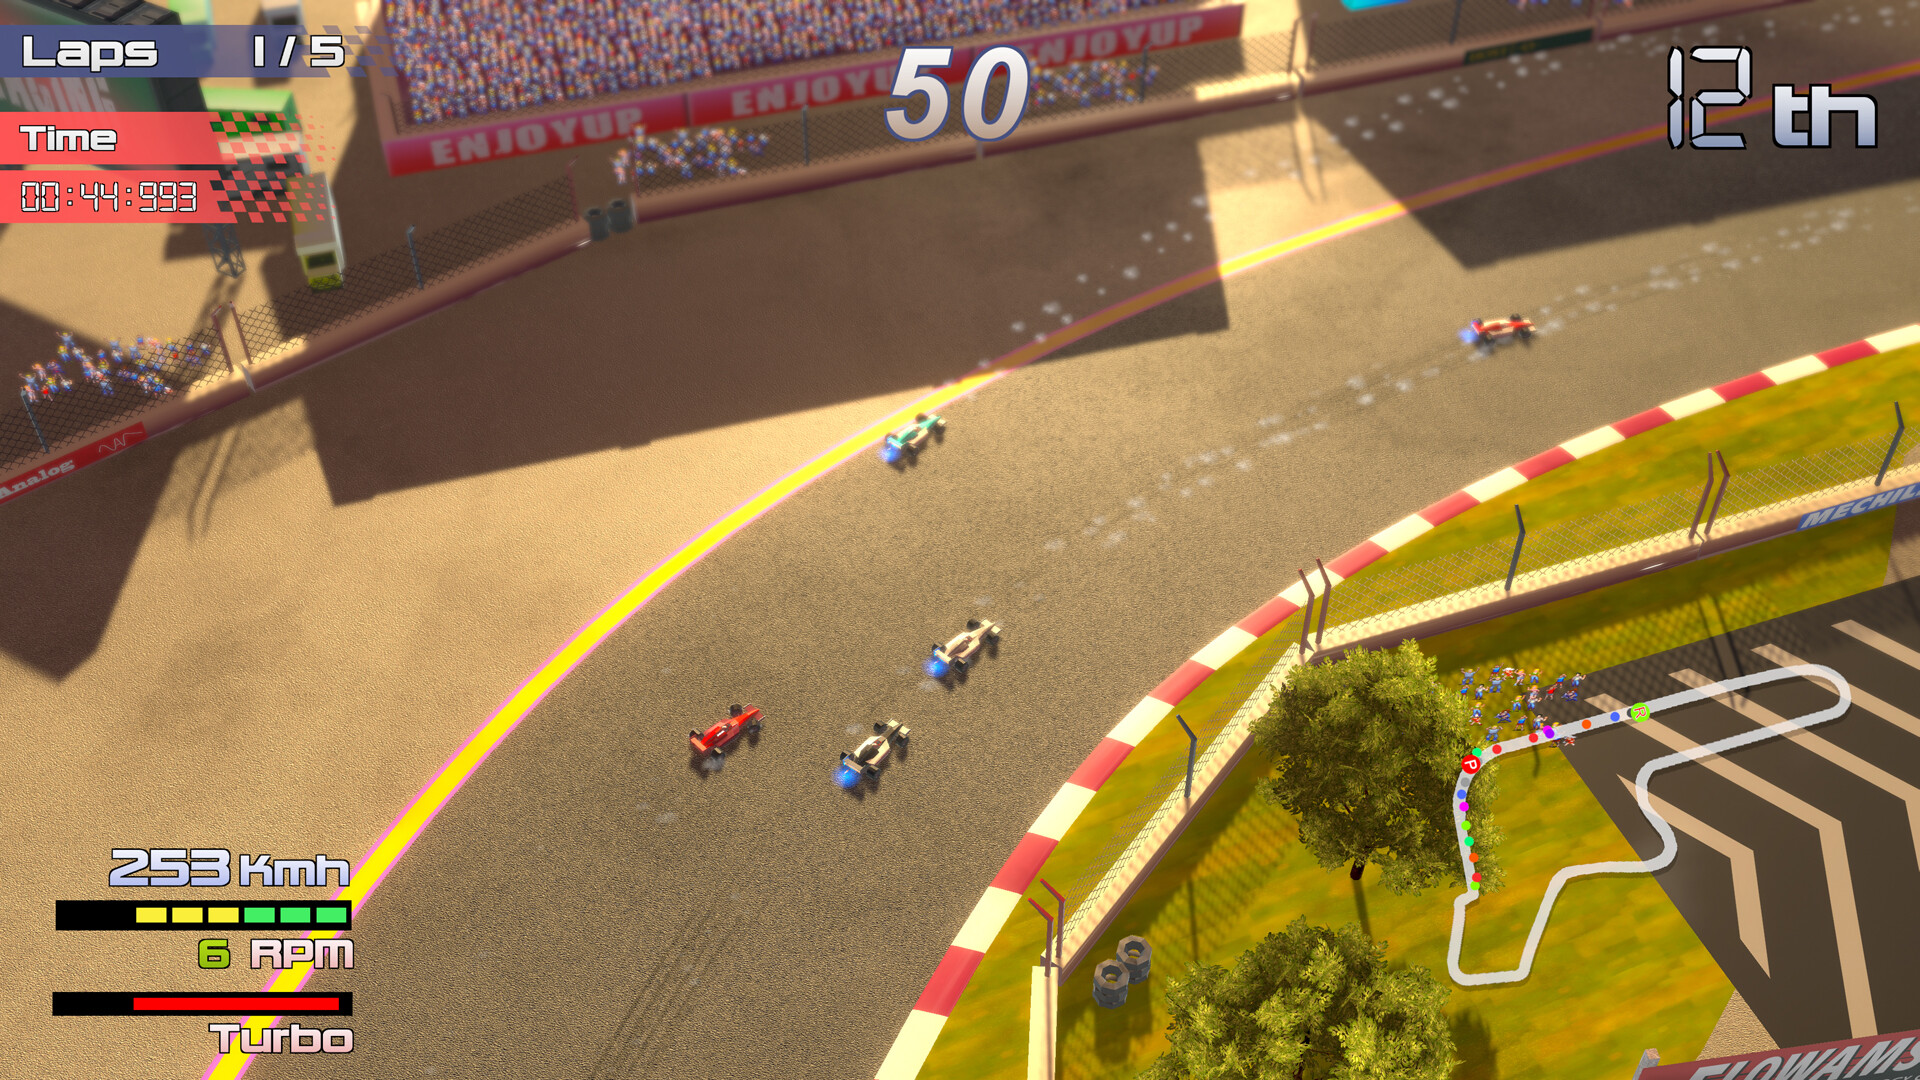 Grand Prix Rock 'N Racing Featured Screenshot #1